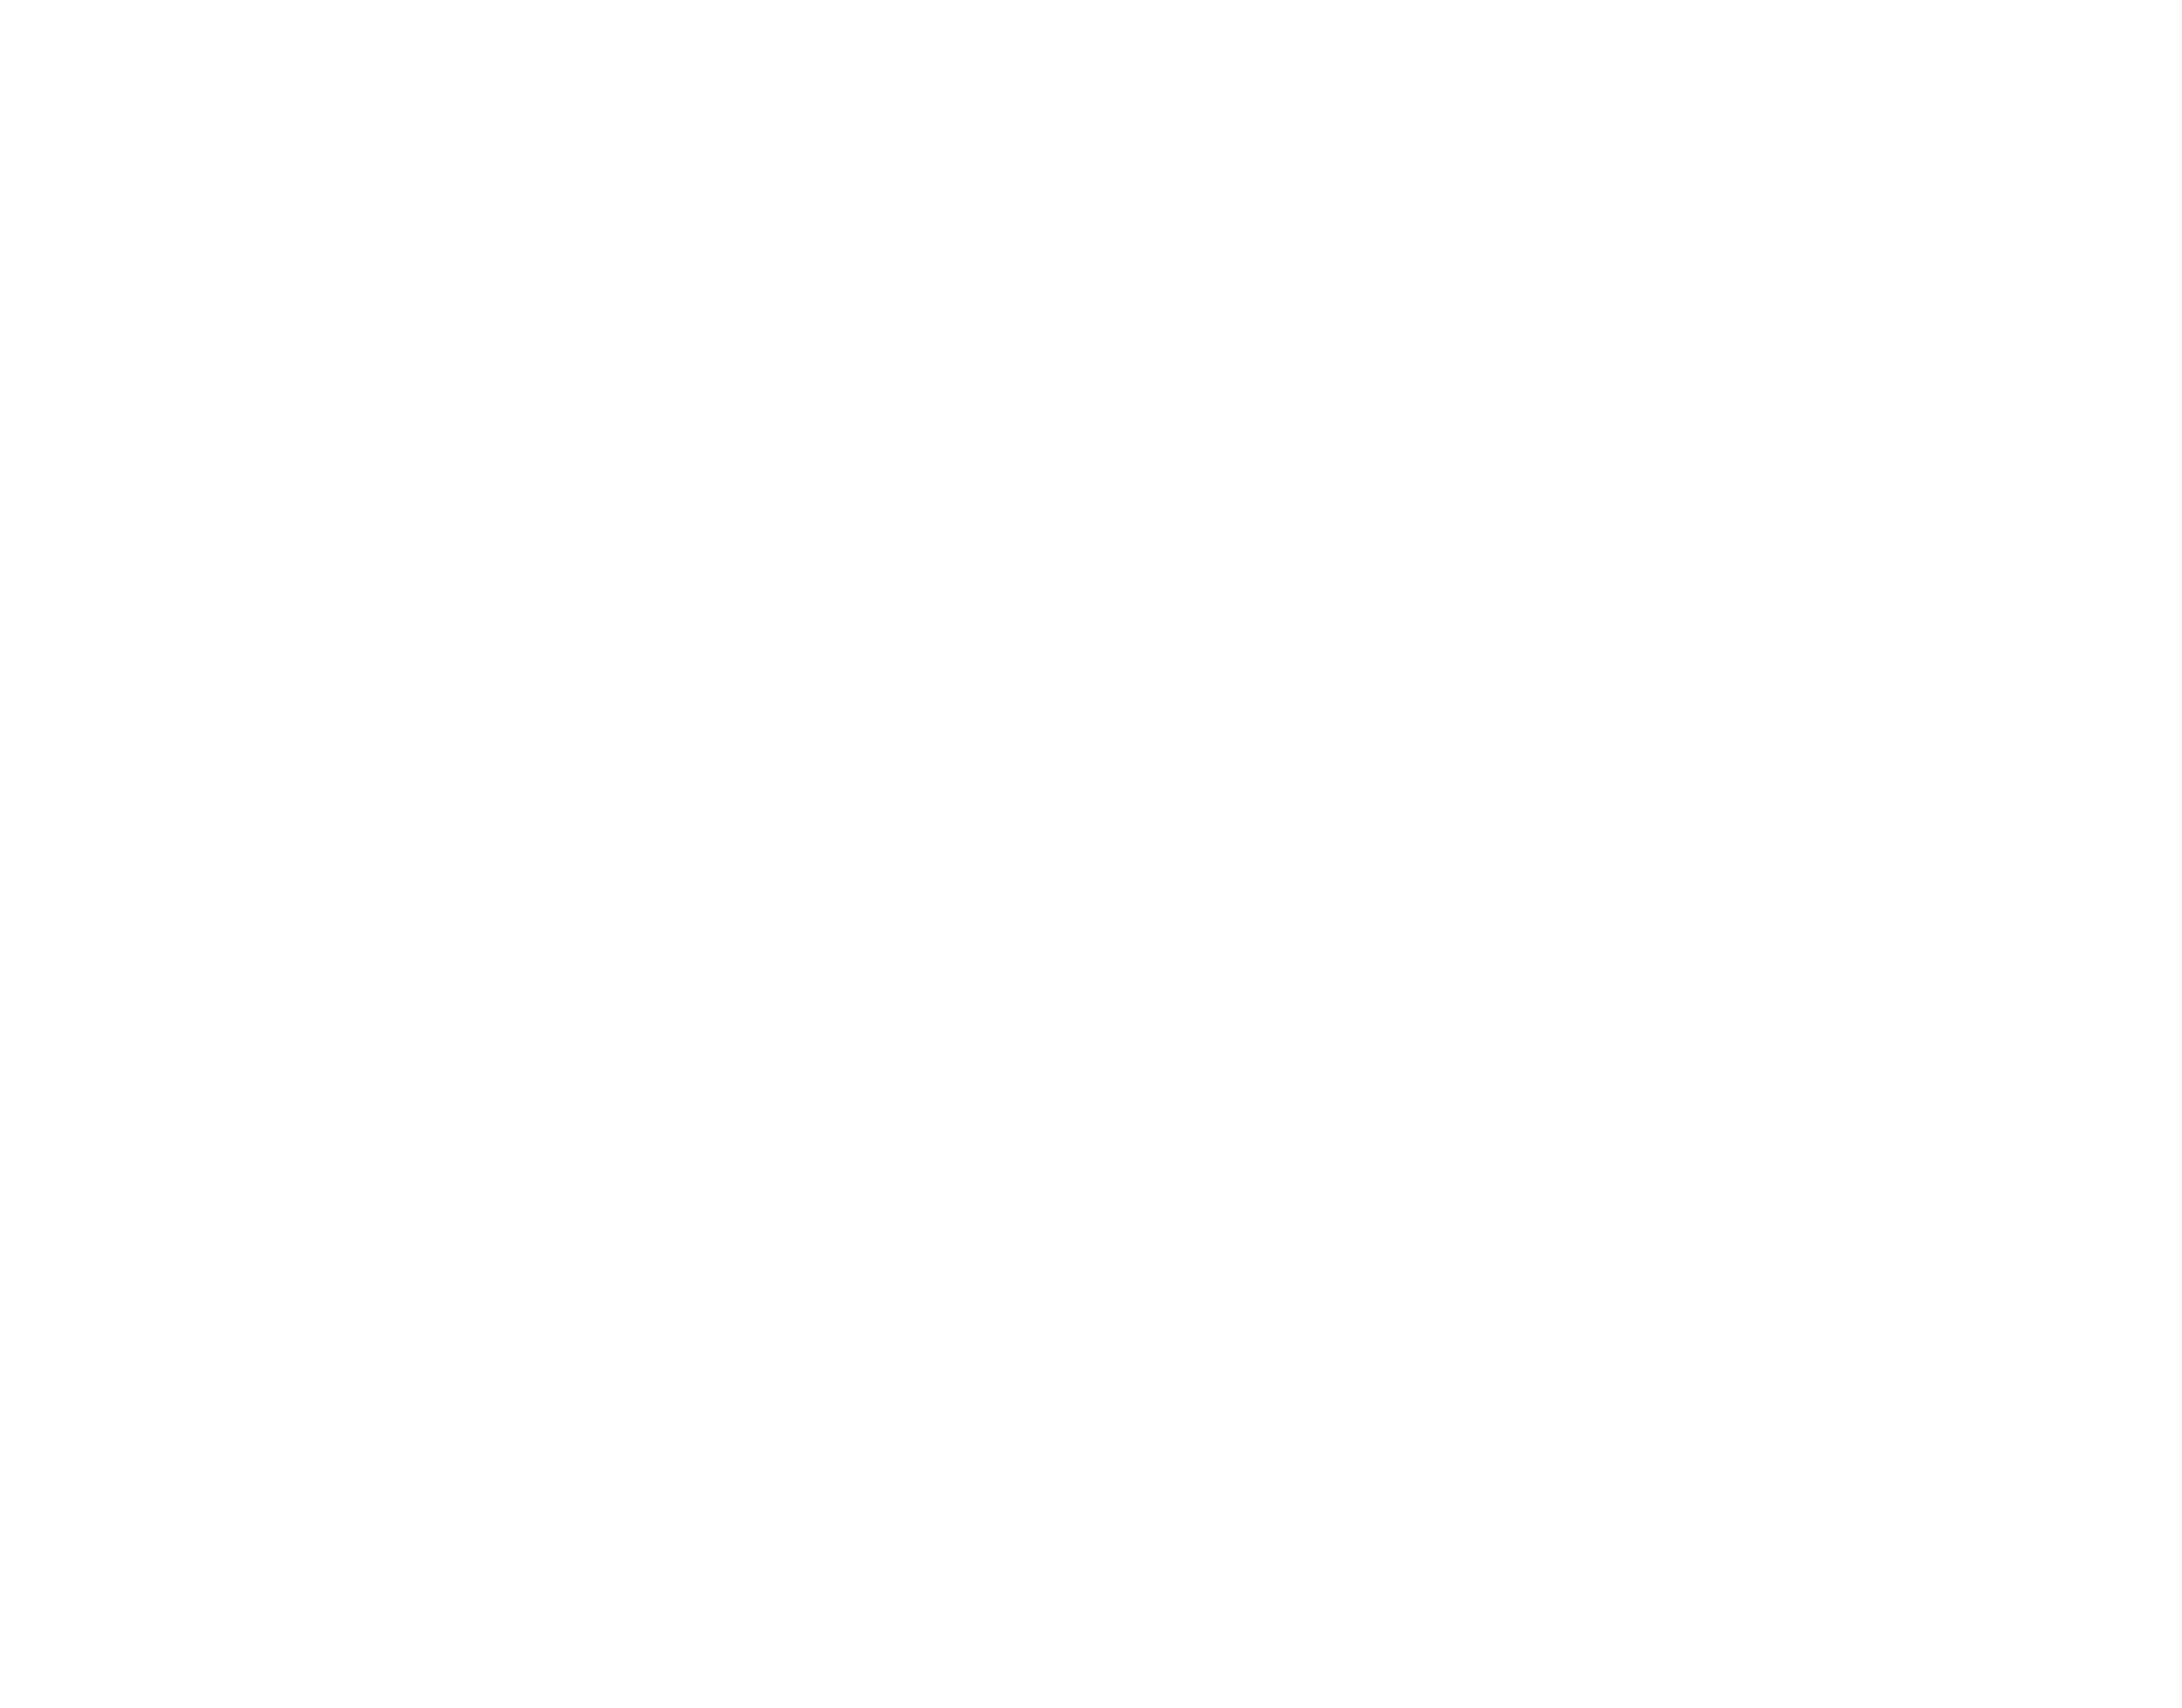 GoaGang Project